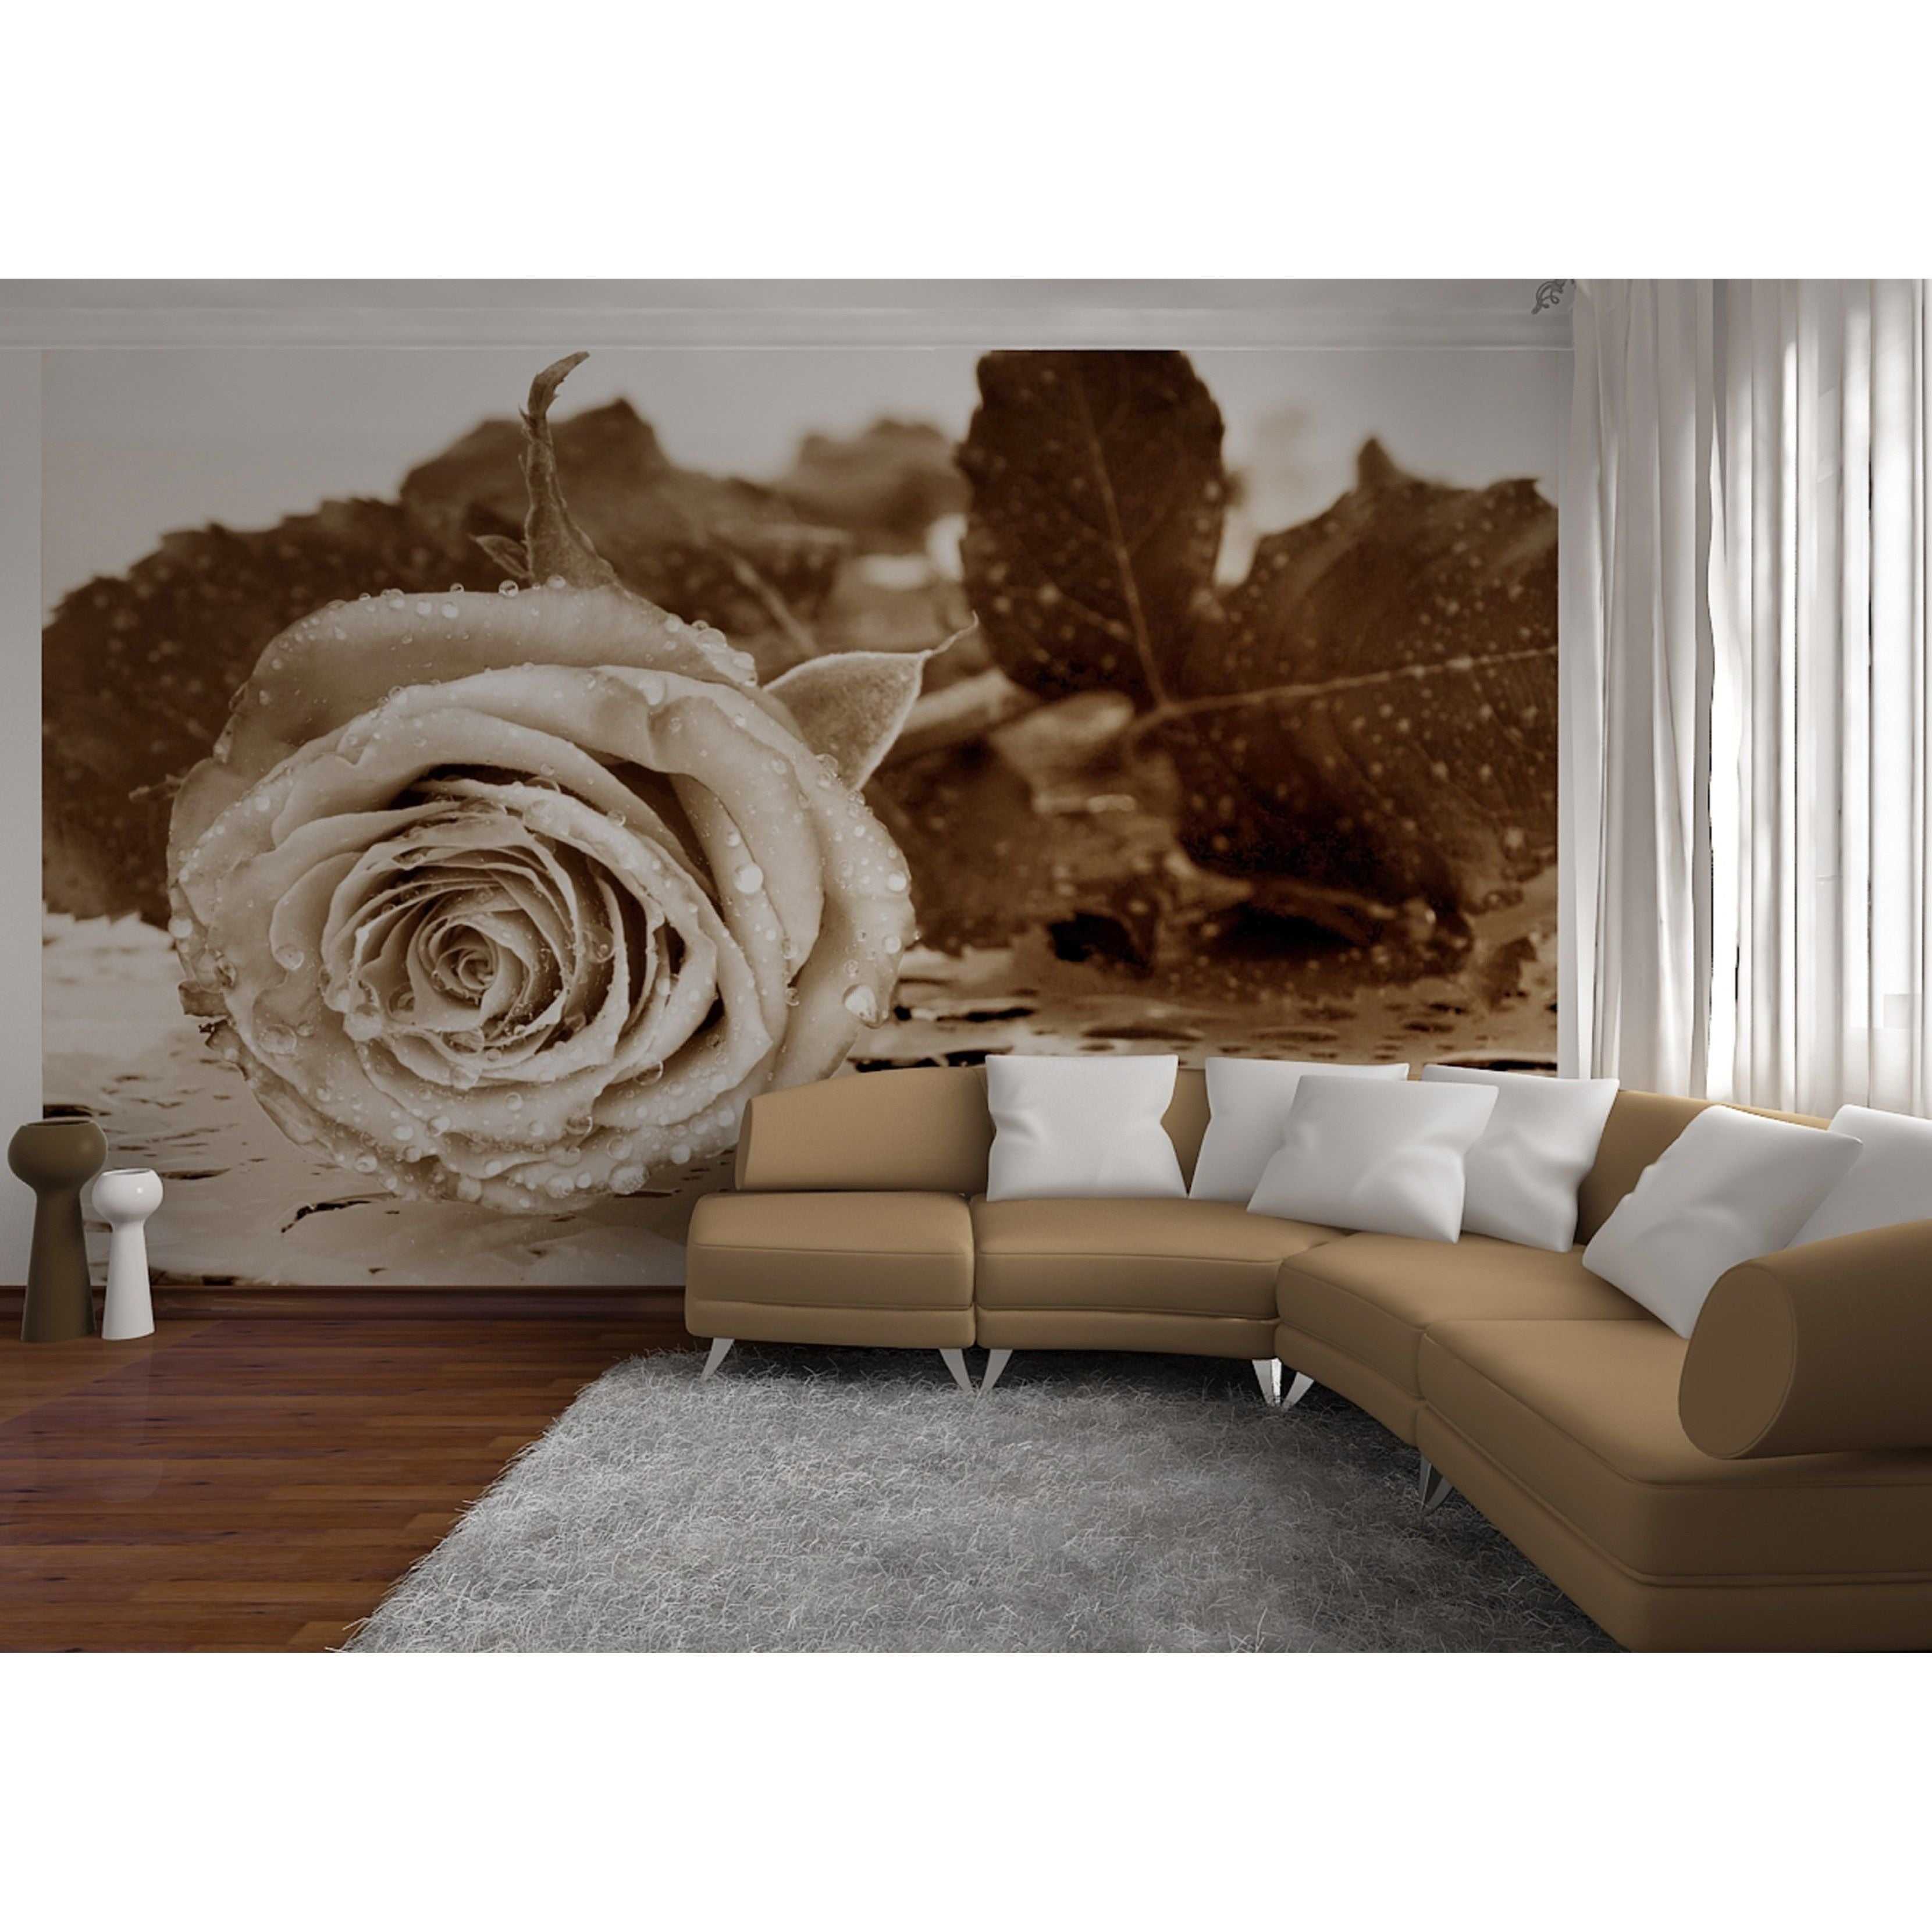 Monochrome Rose Elegance: Floral Wall Mural